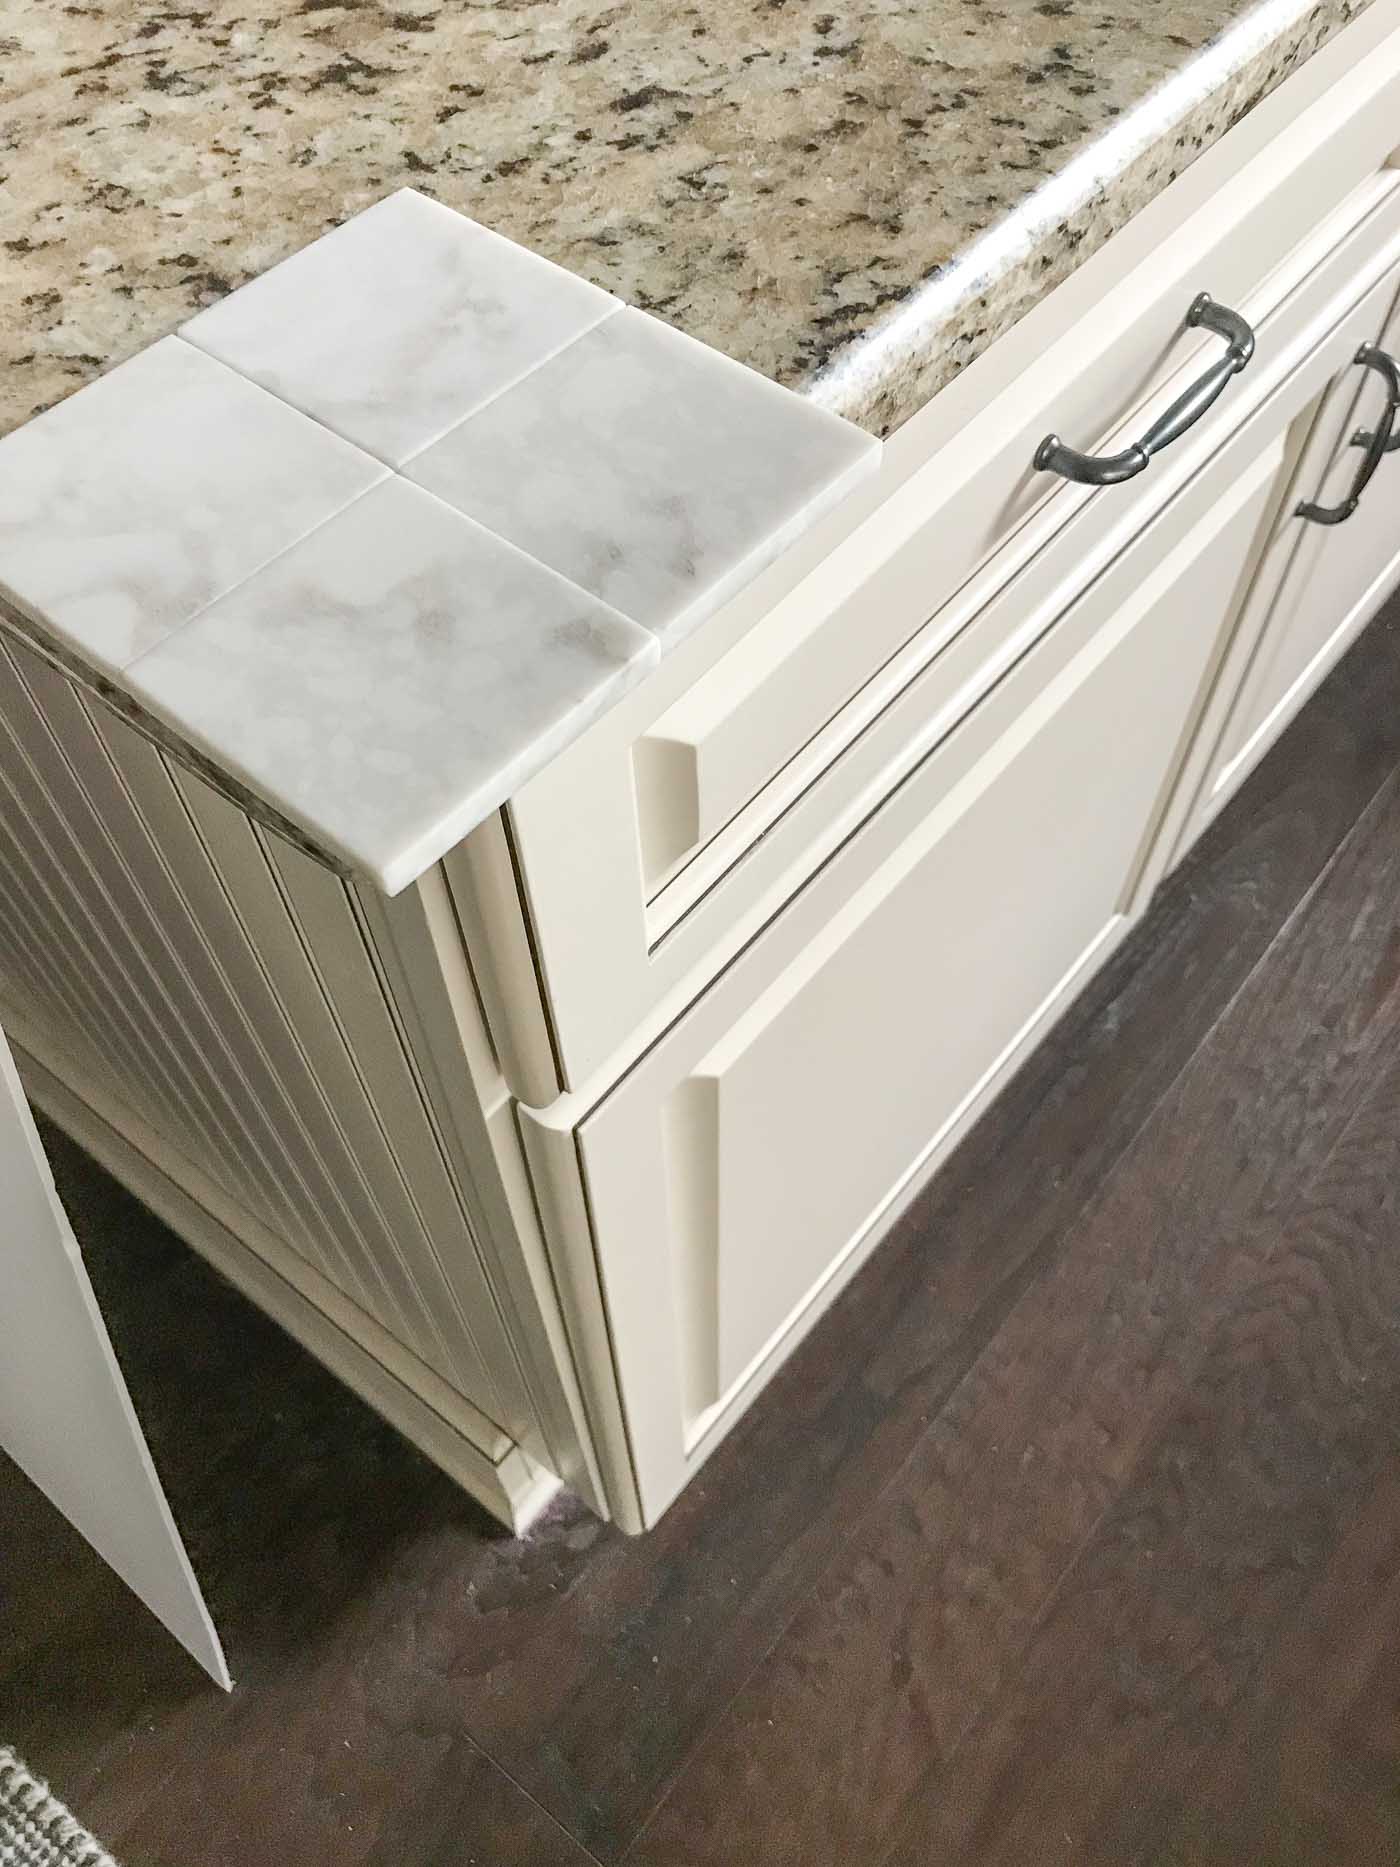 Cream Kitchen, What Color Quartz Countertops Go With White Cabinets